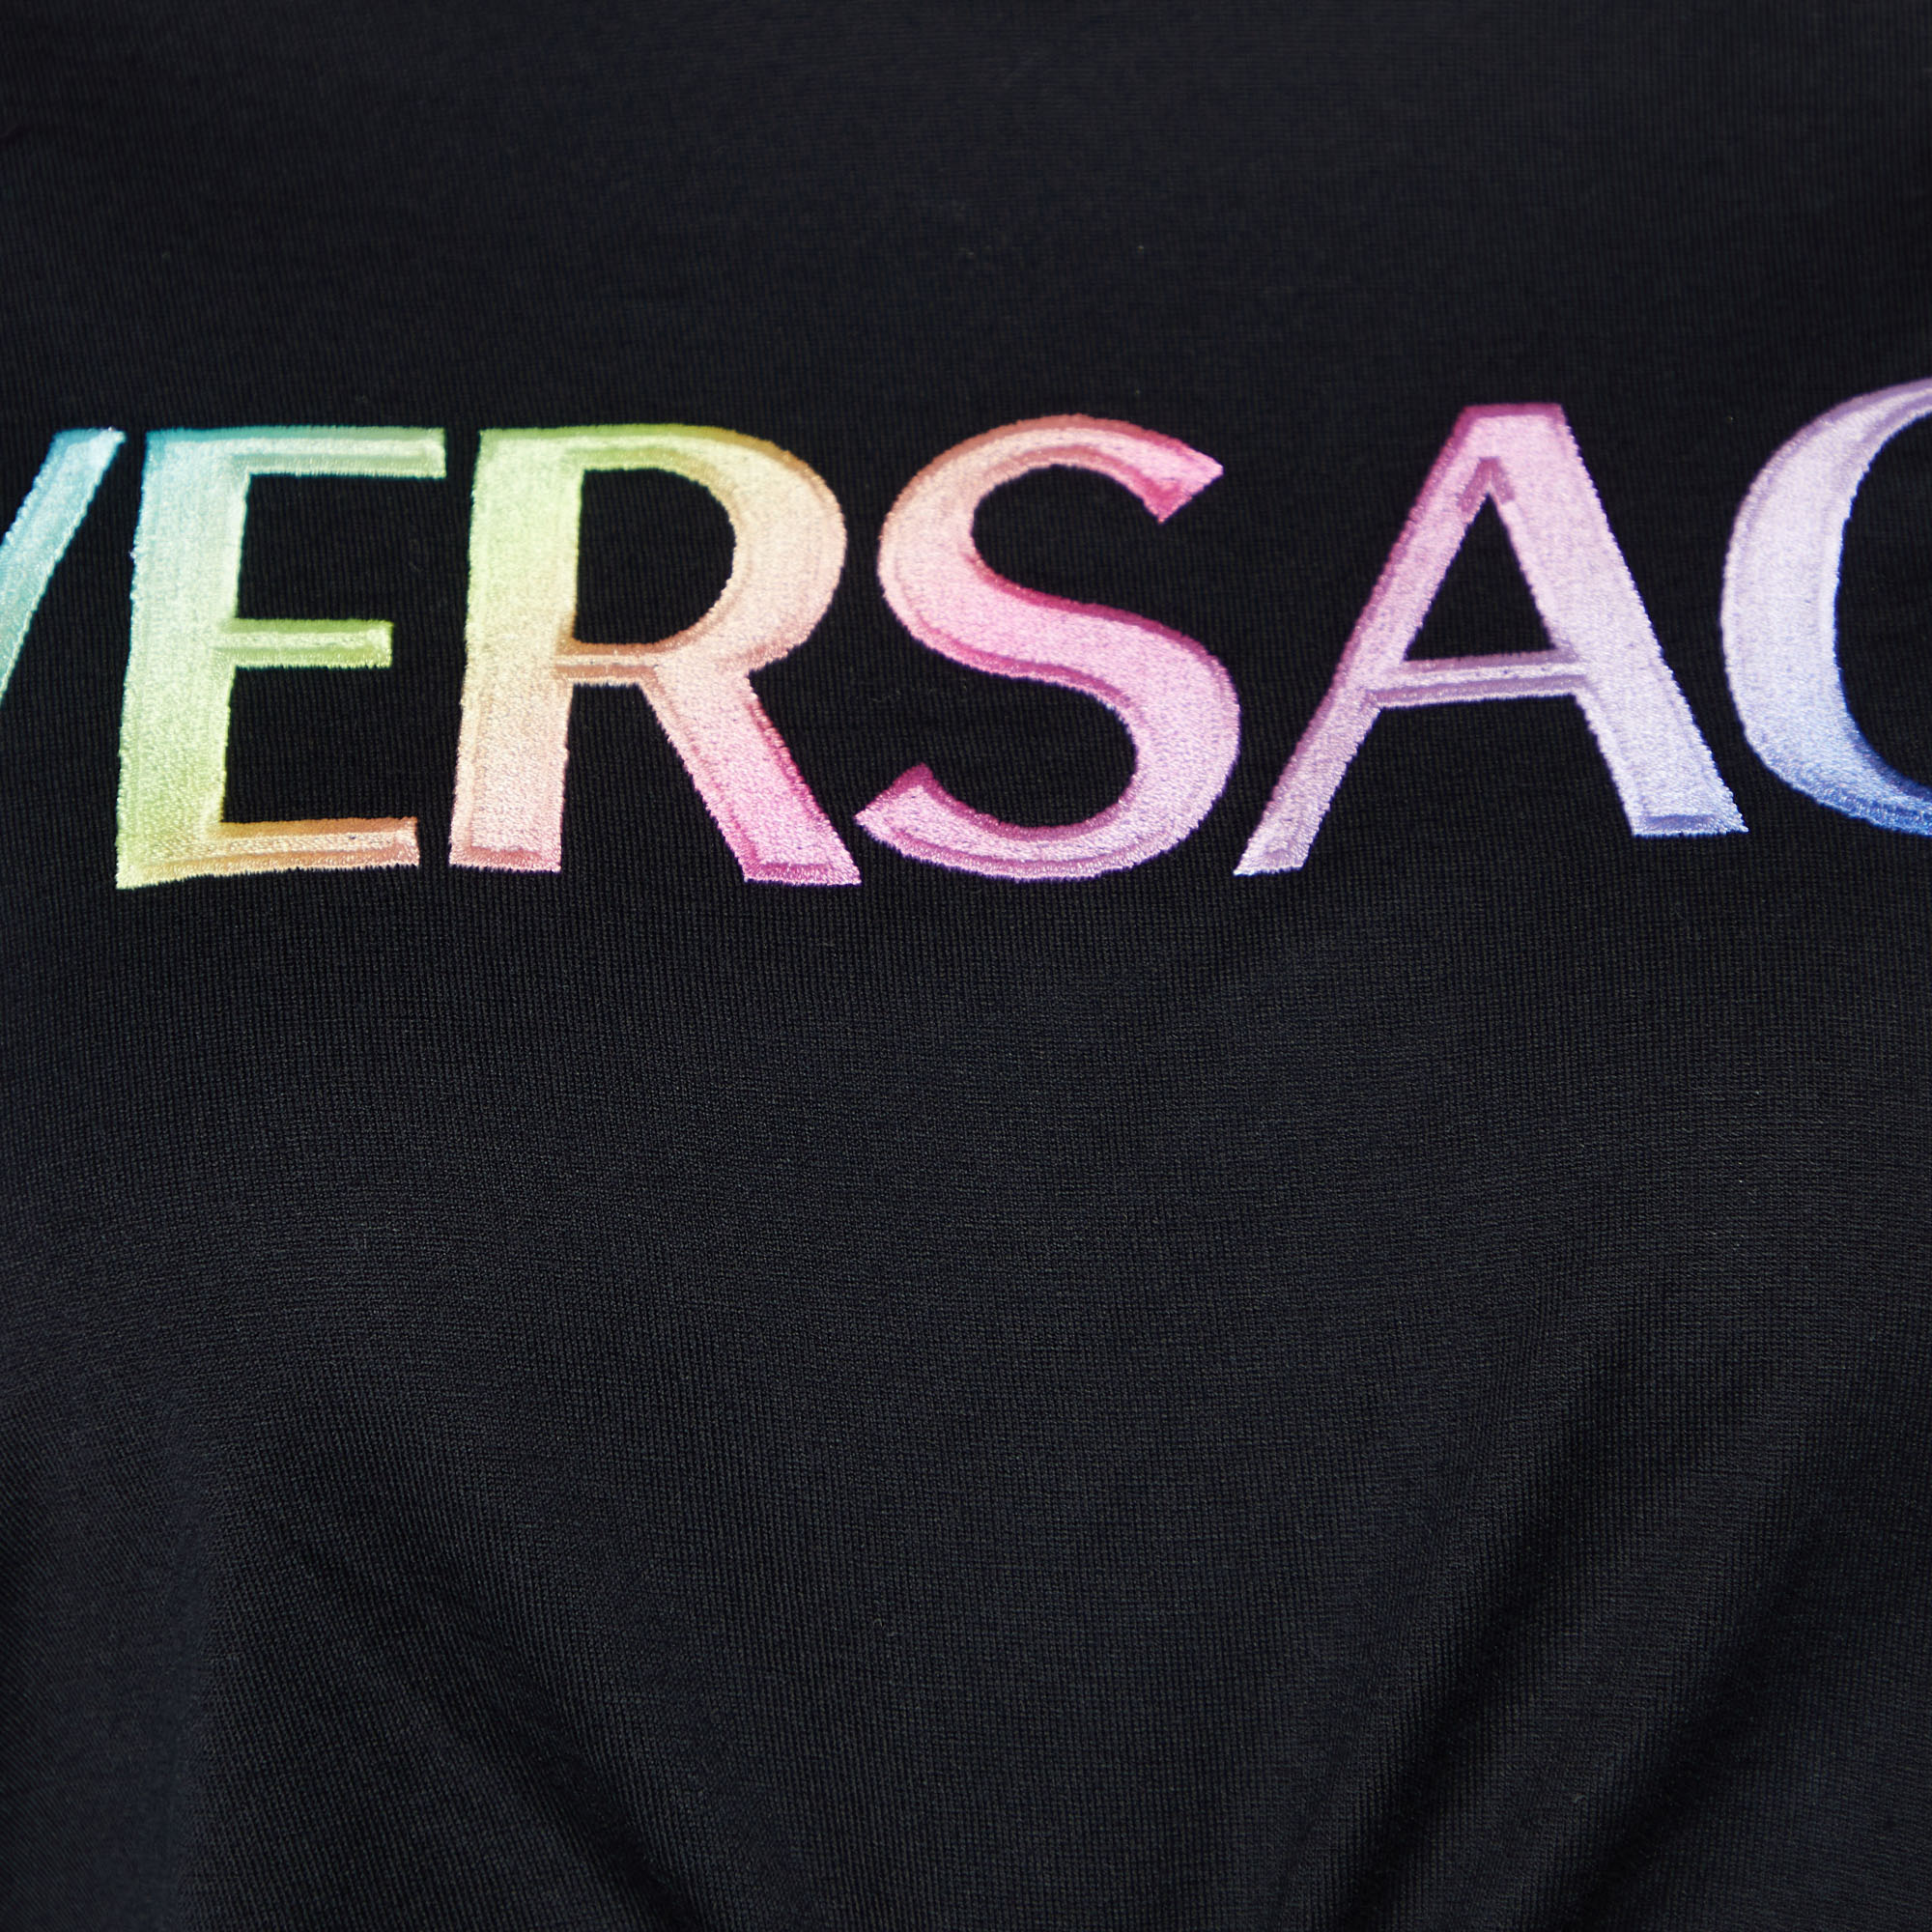 Versace Black Logo Embroidered Cotton Twisted Hem Crop T-Shirt S